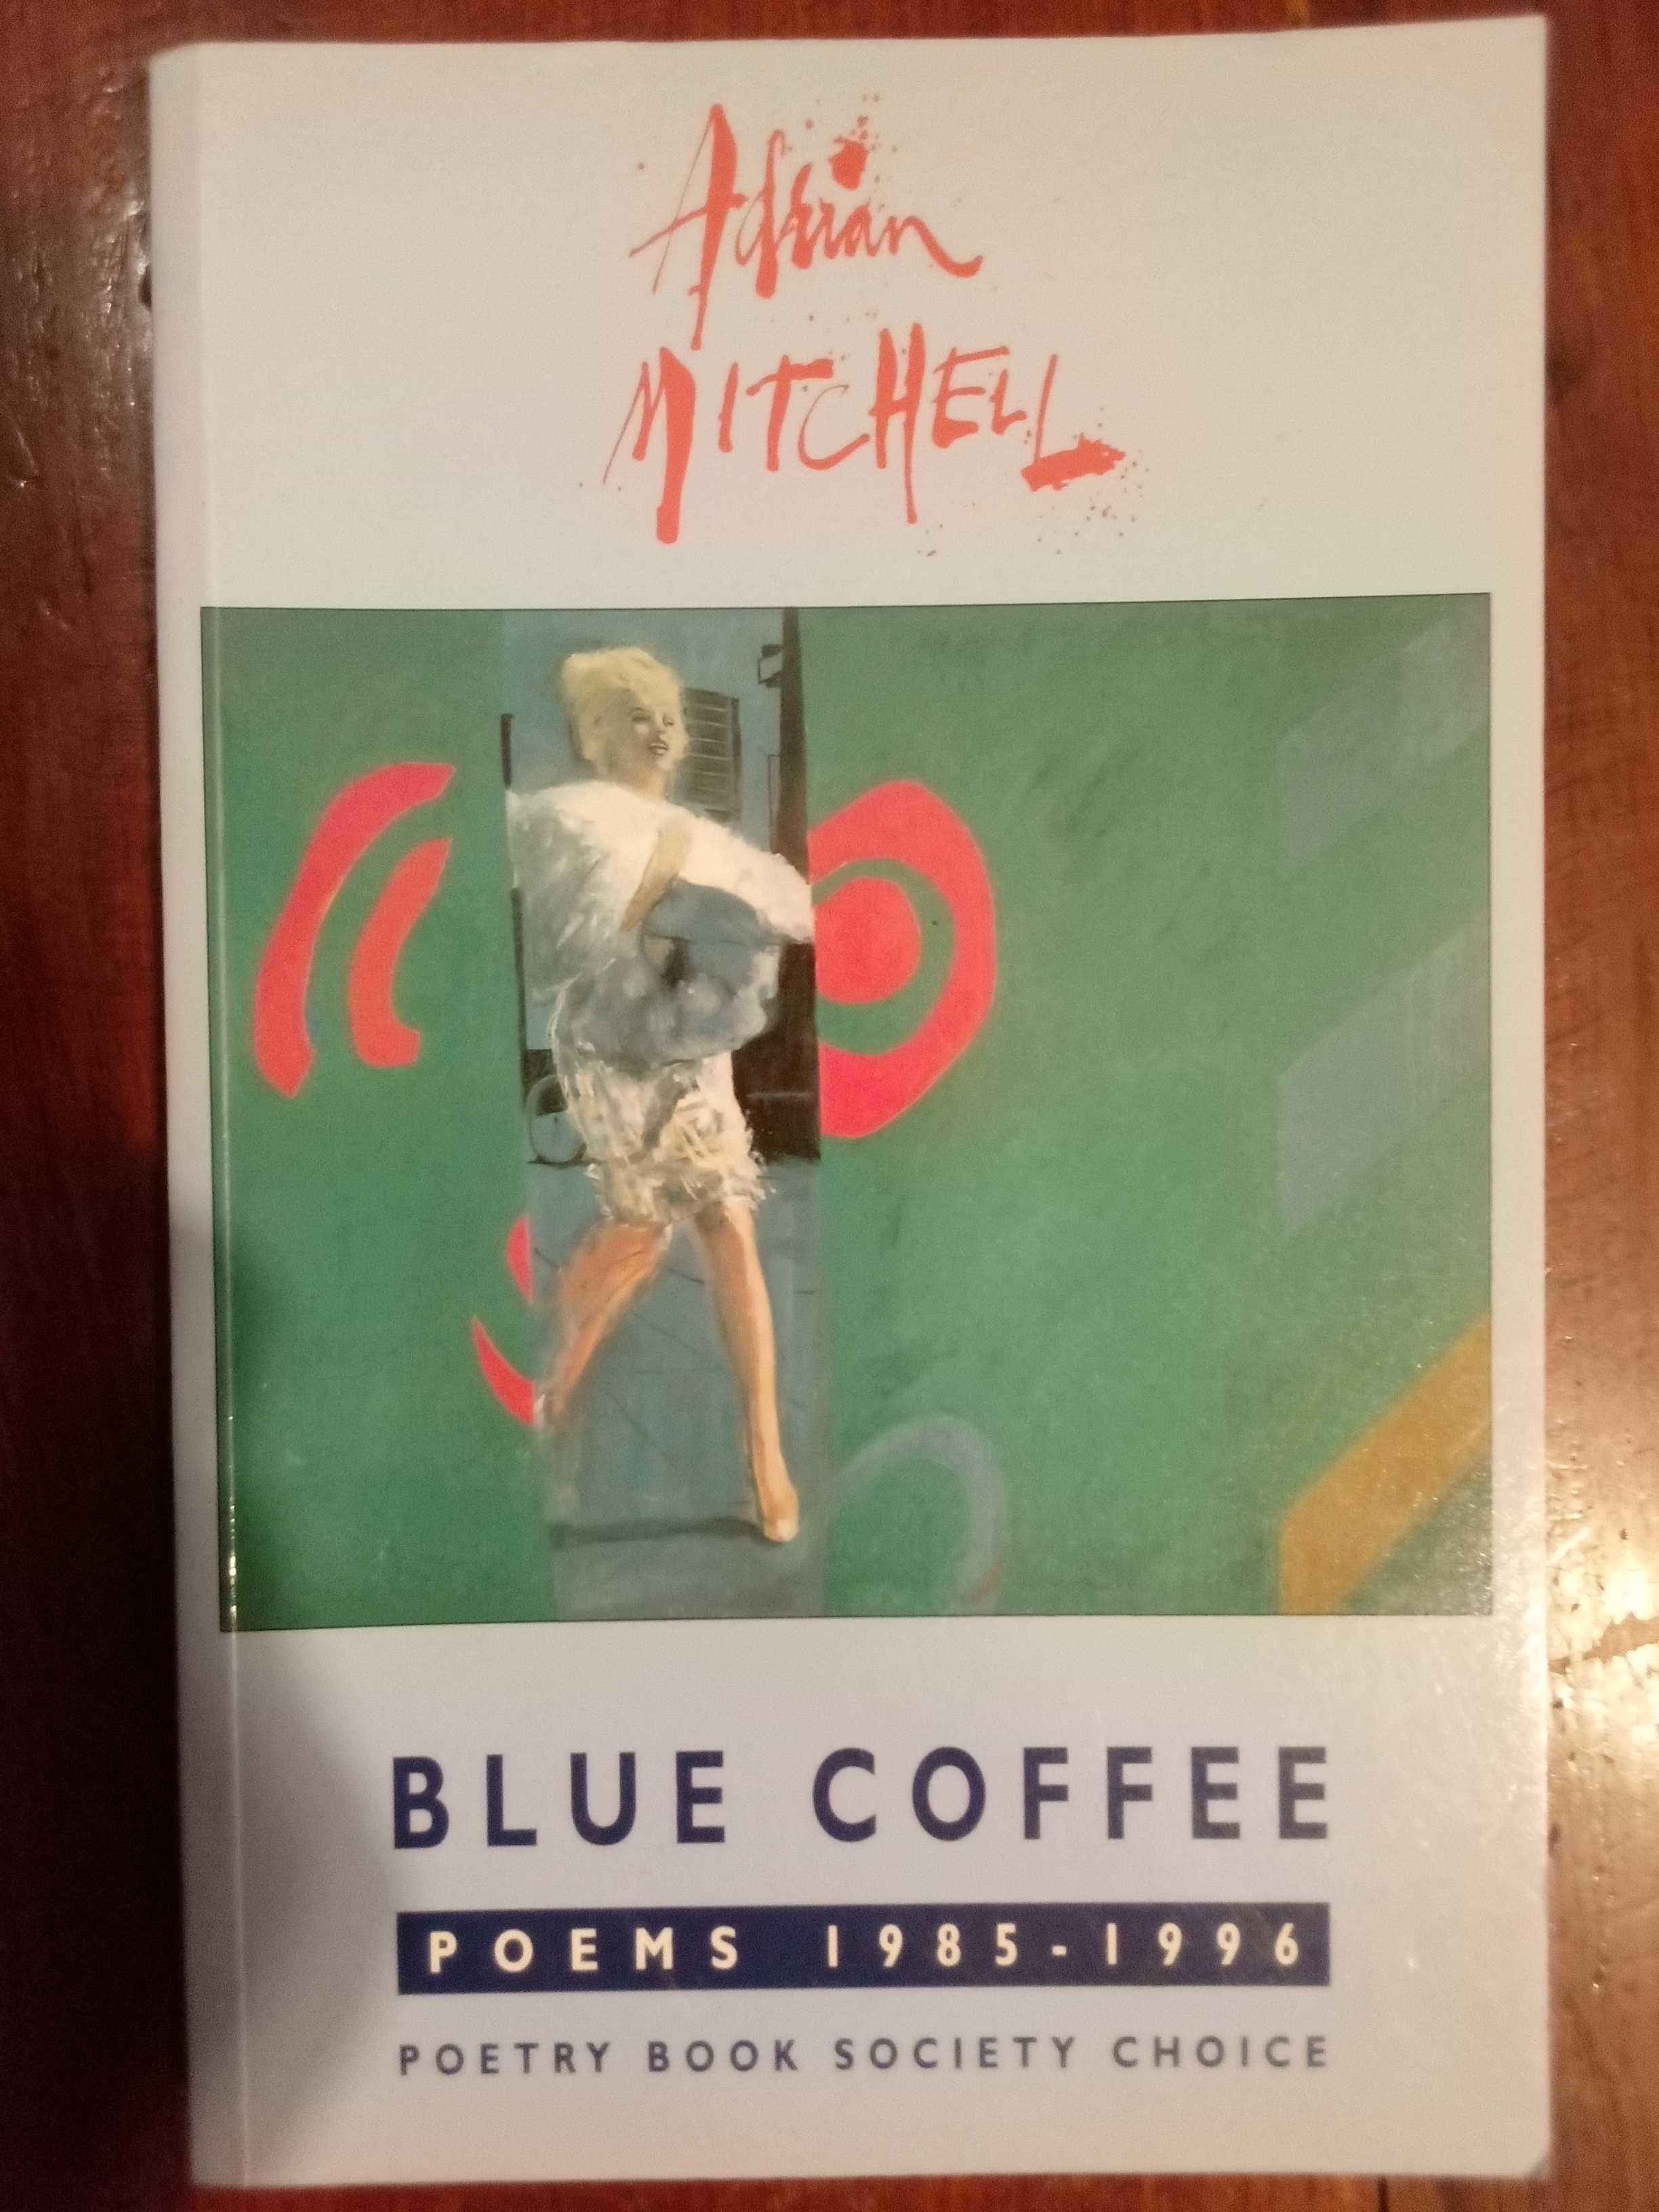 Adrian Mitchell - Blue coffee 1985.-1996